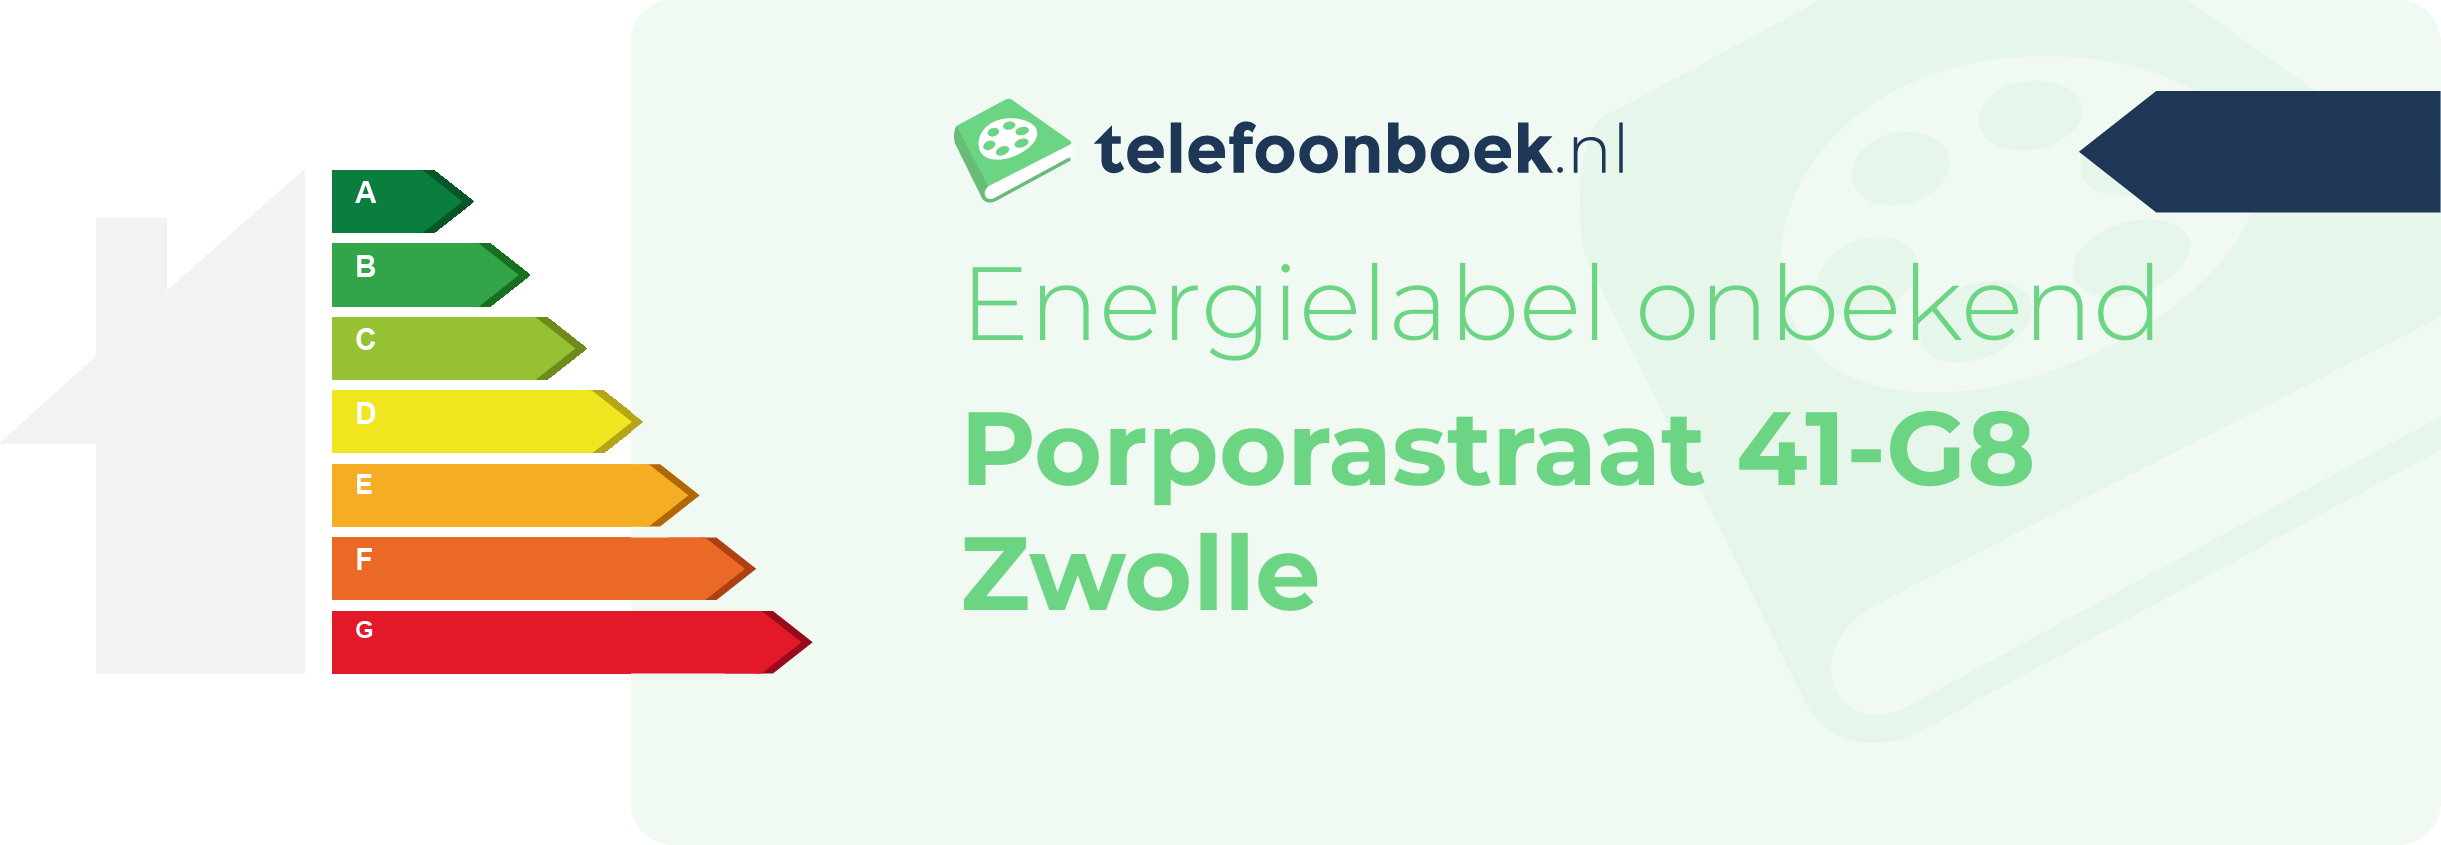 Energielabel Porporastraat 41-G8 Zwolle